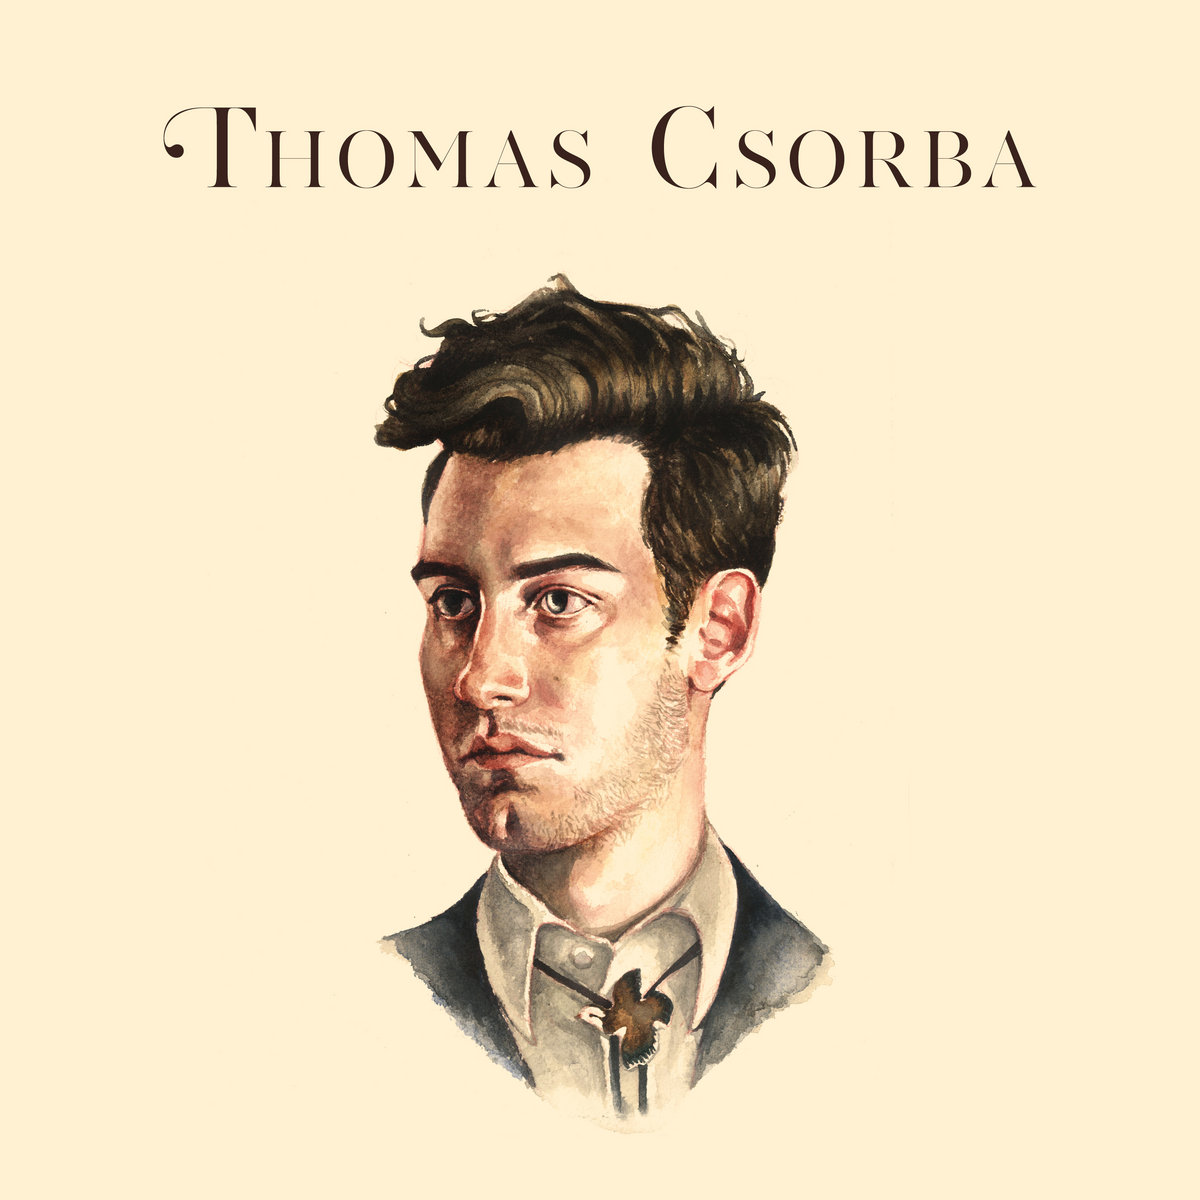 Thomas Csorba